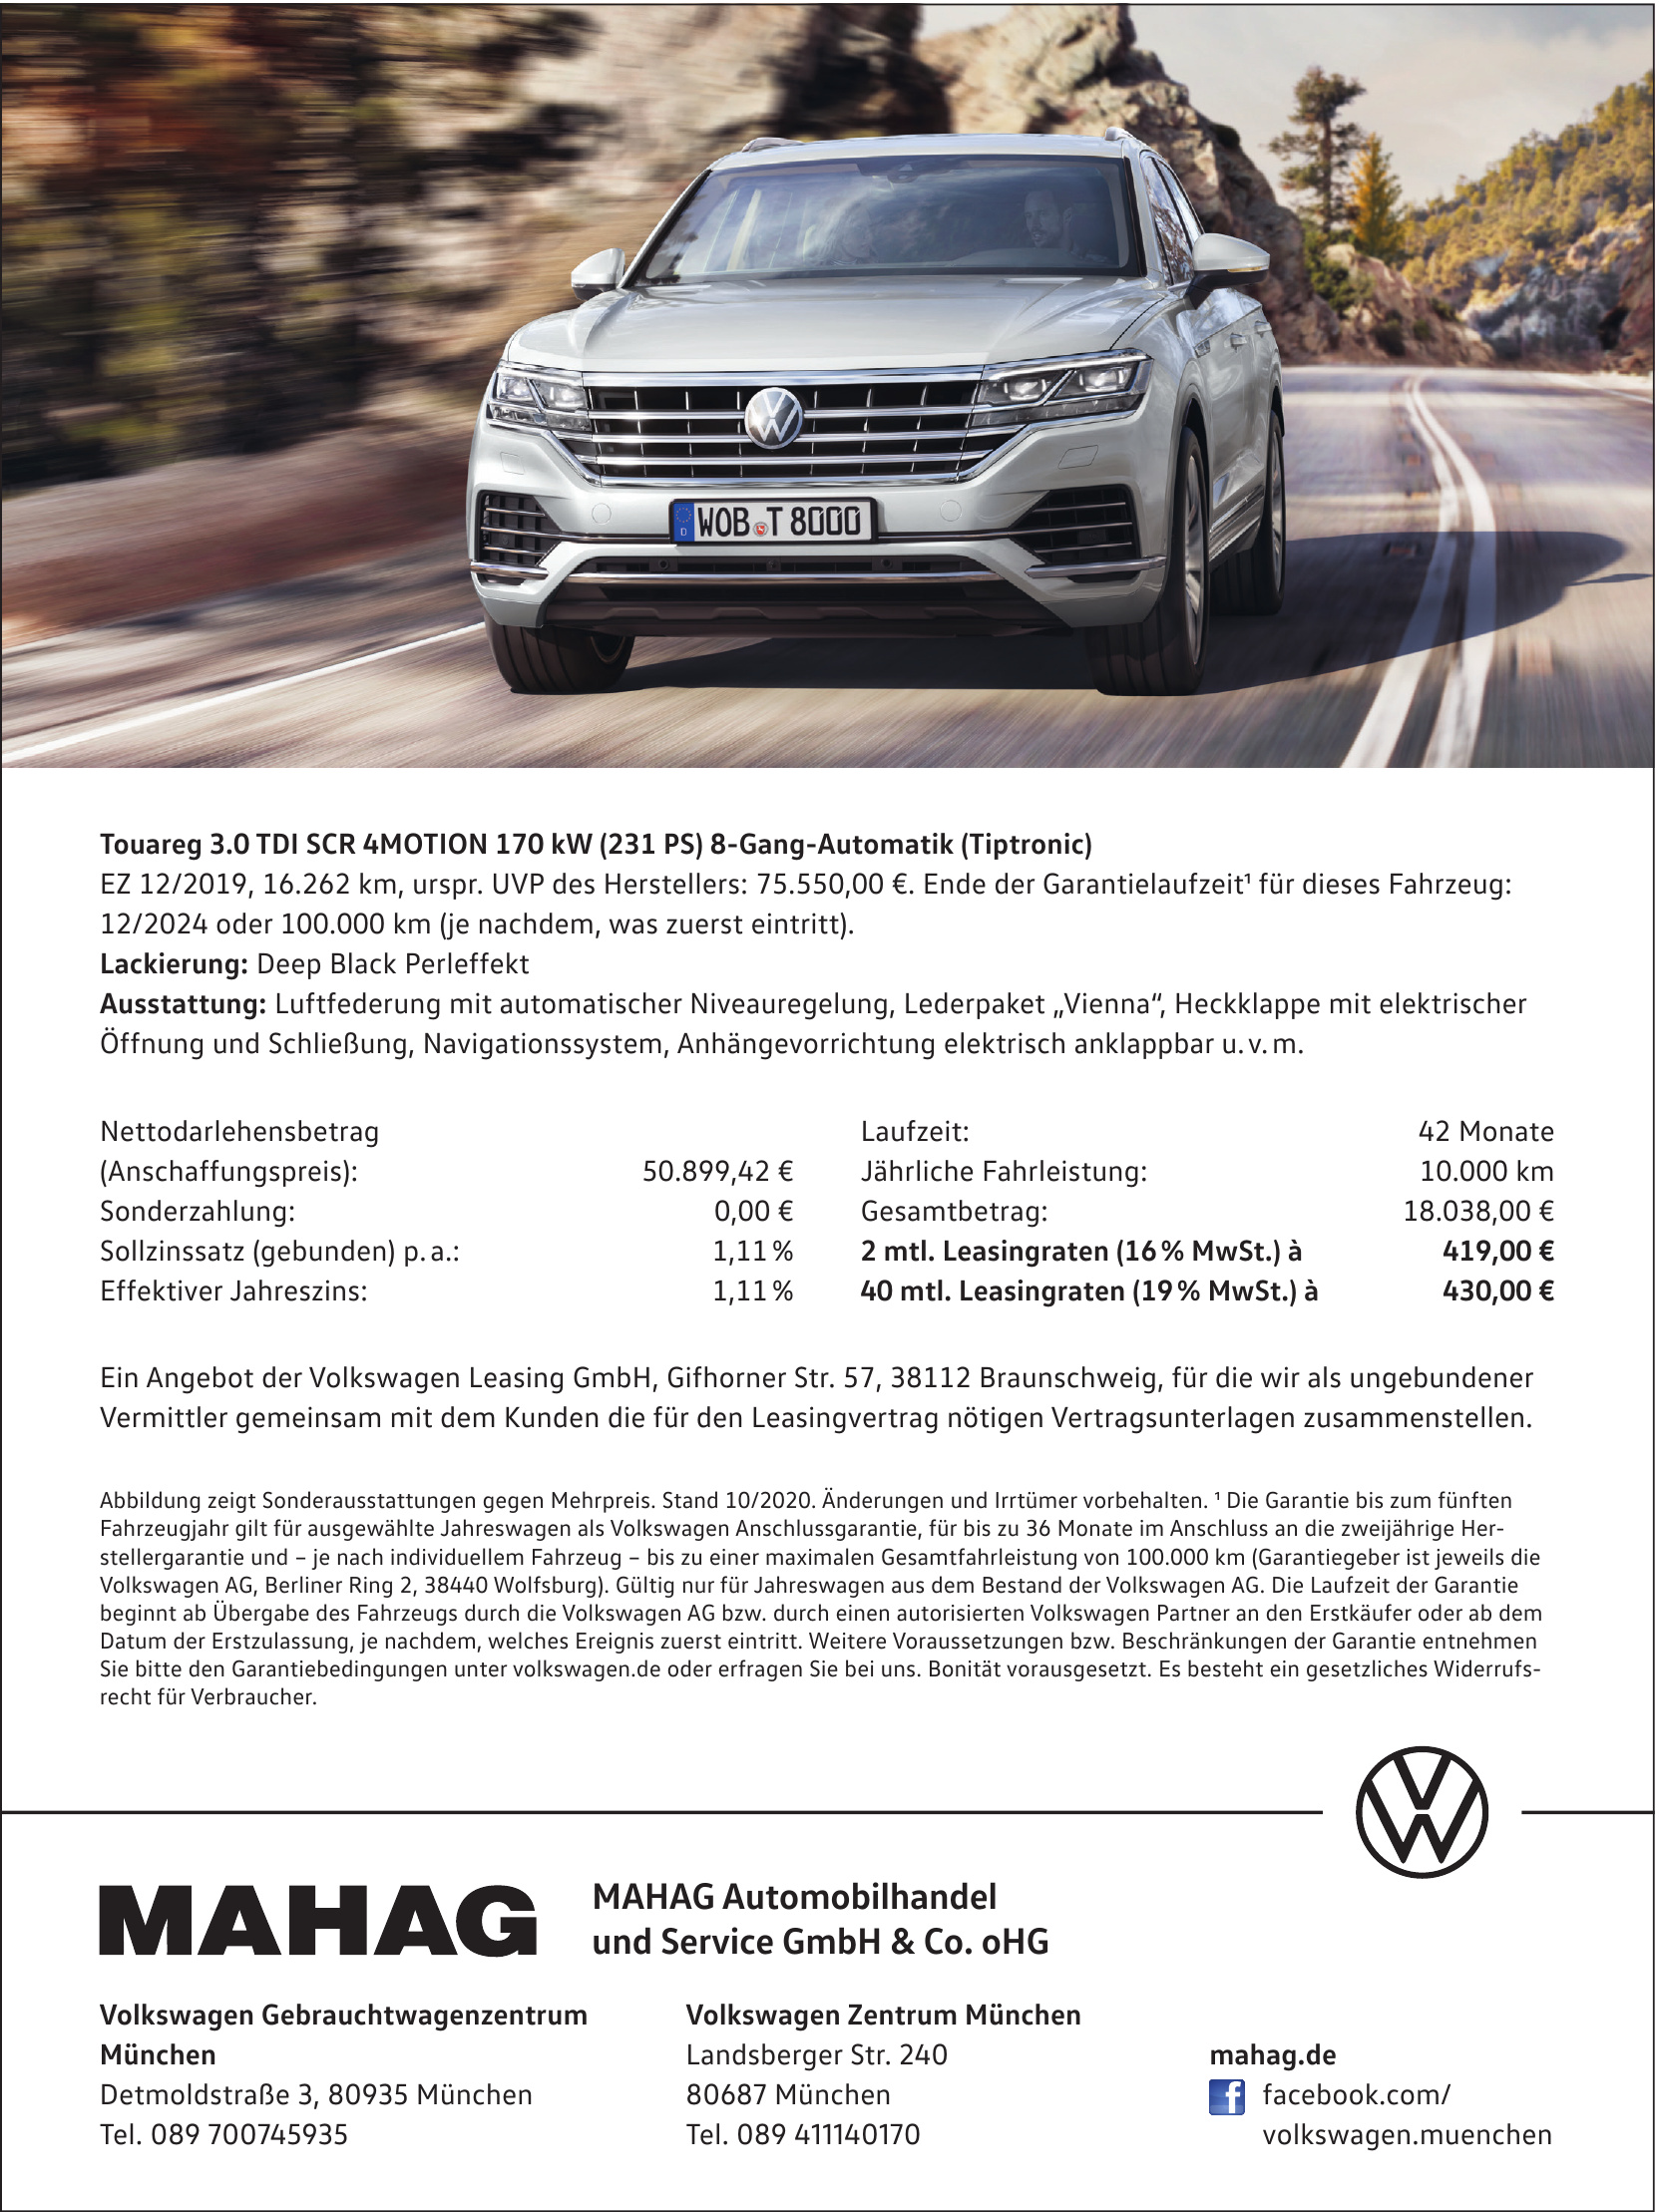 MAHAG Automobilhandel und Service GmbH & Co. oHG 